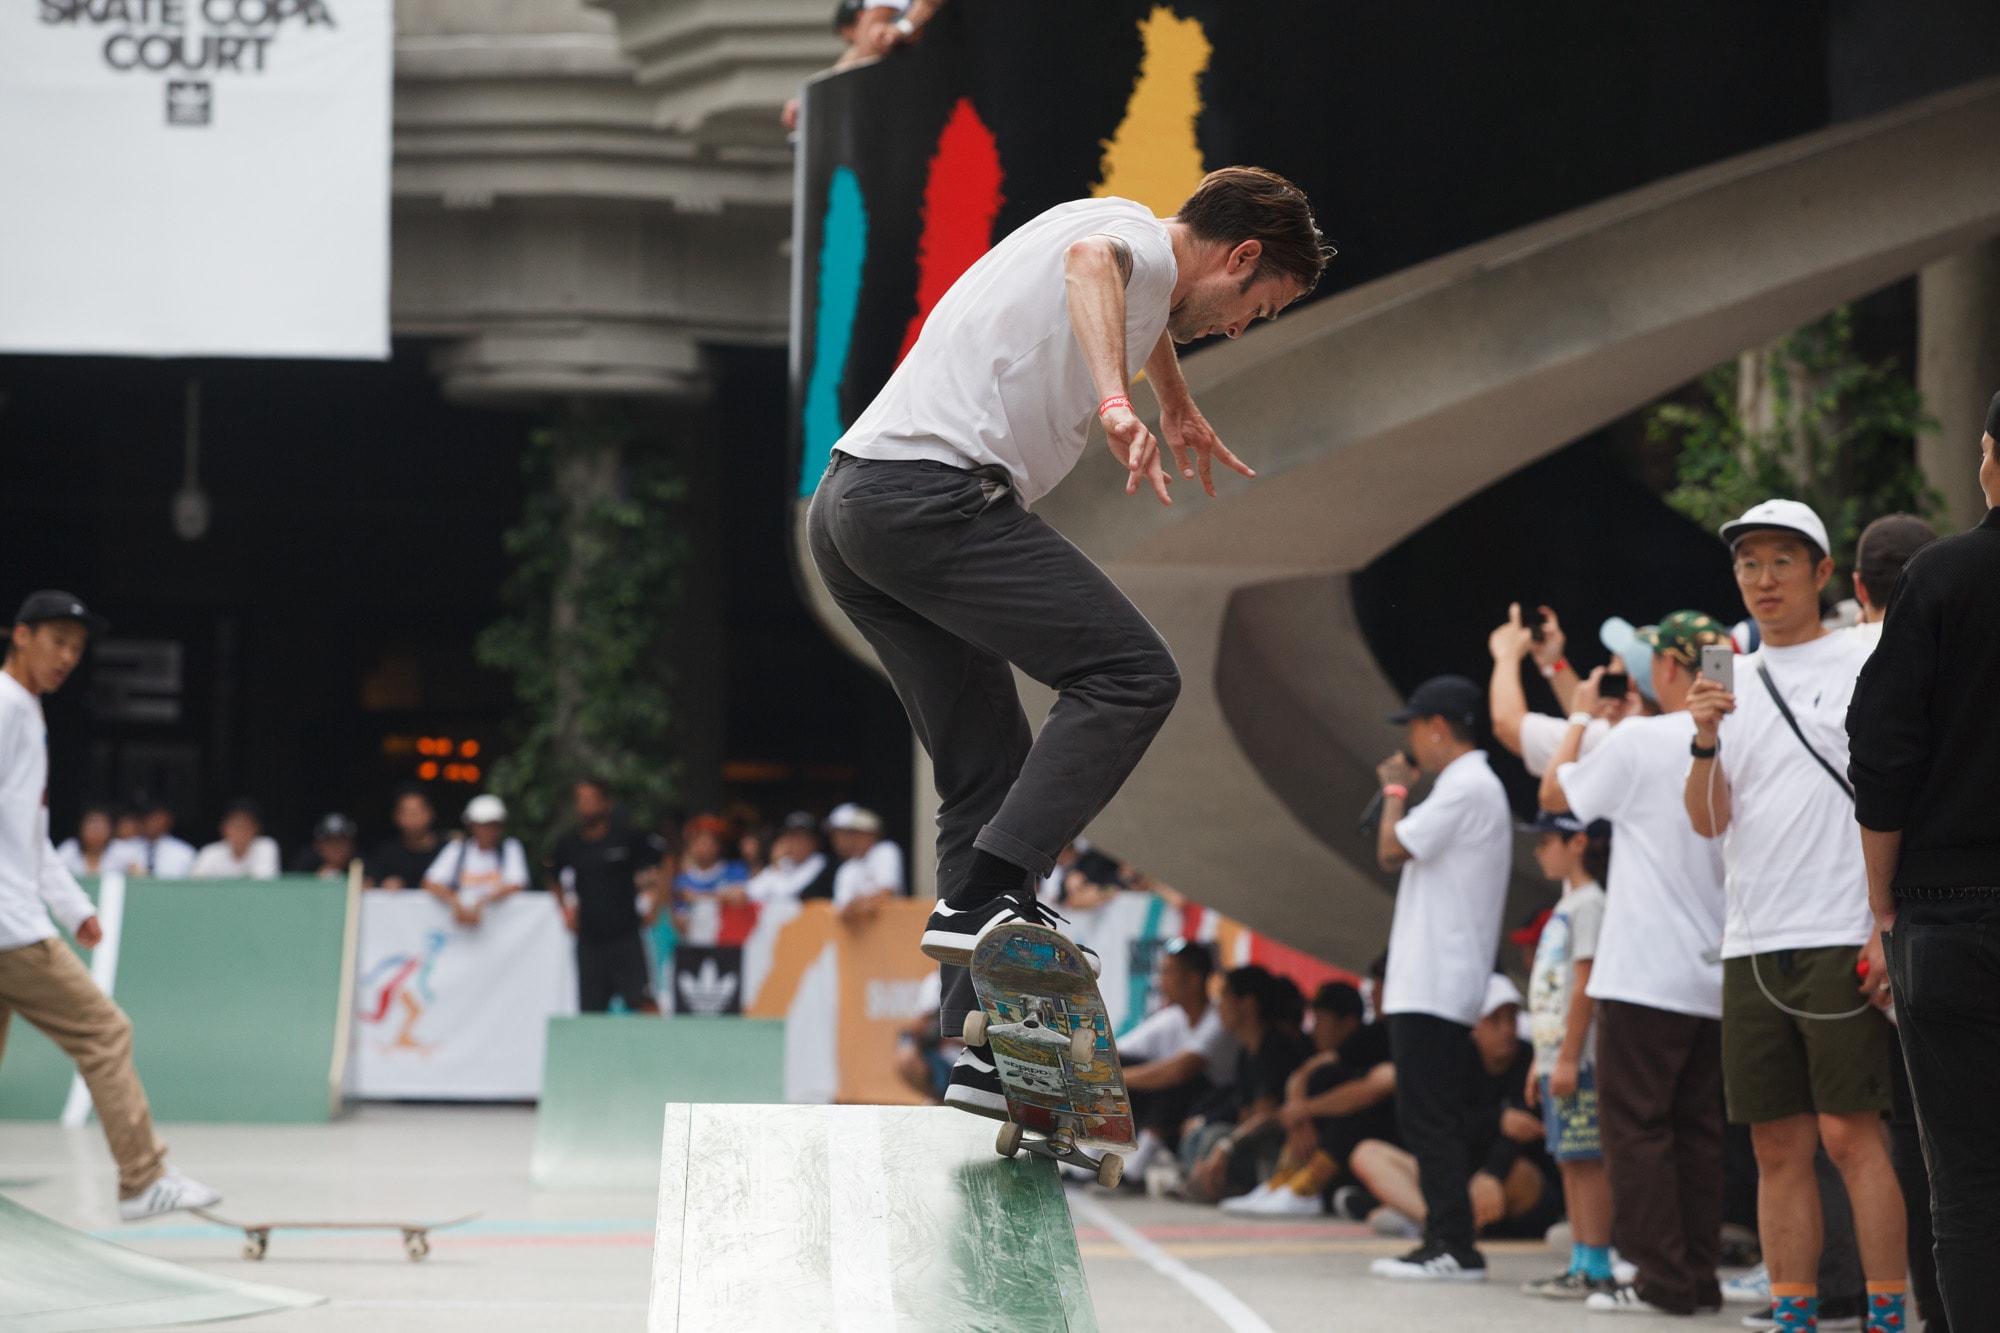 adidas Skateboarding 2017 Skate Copa Court Shanghai Recap